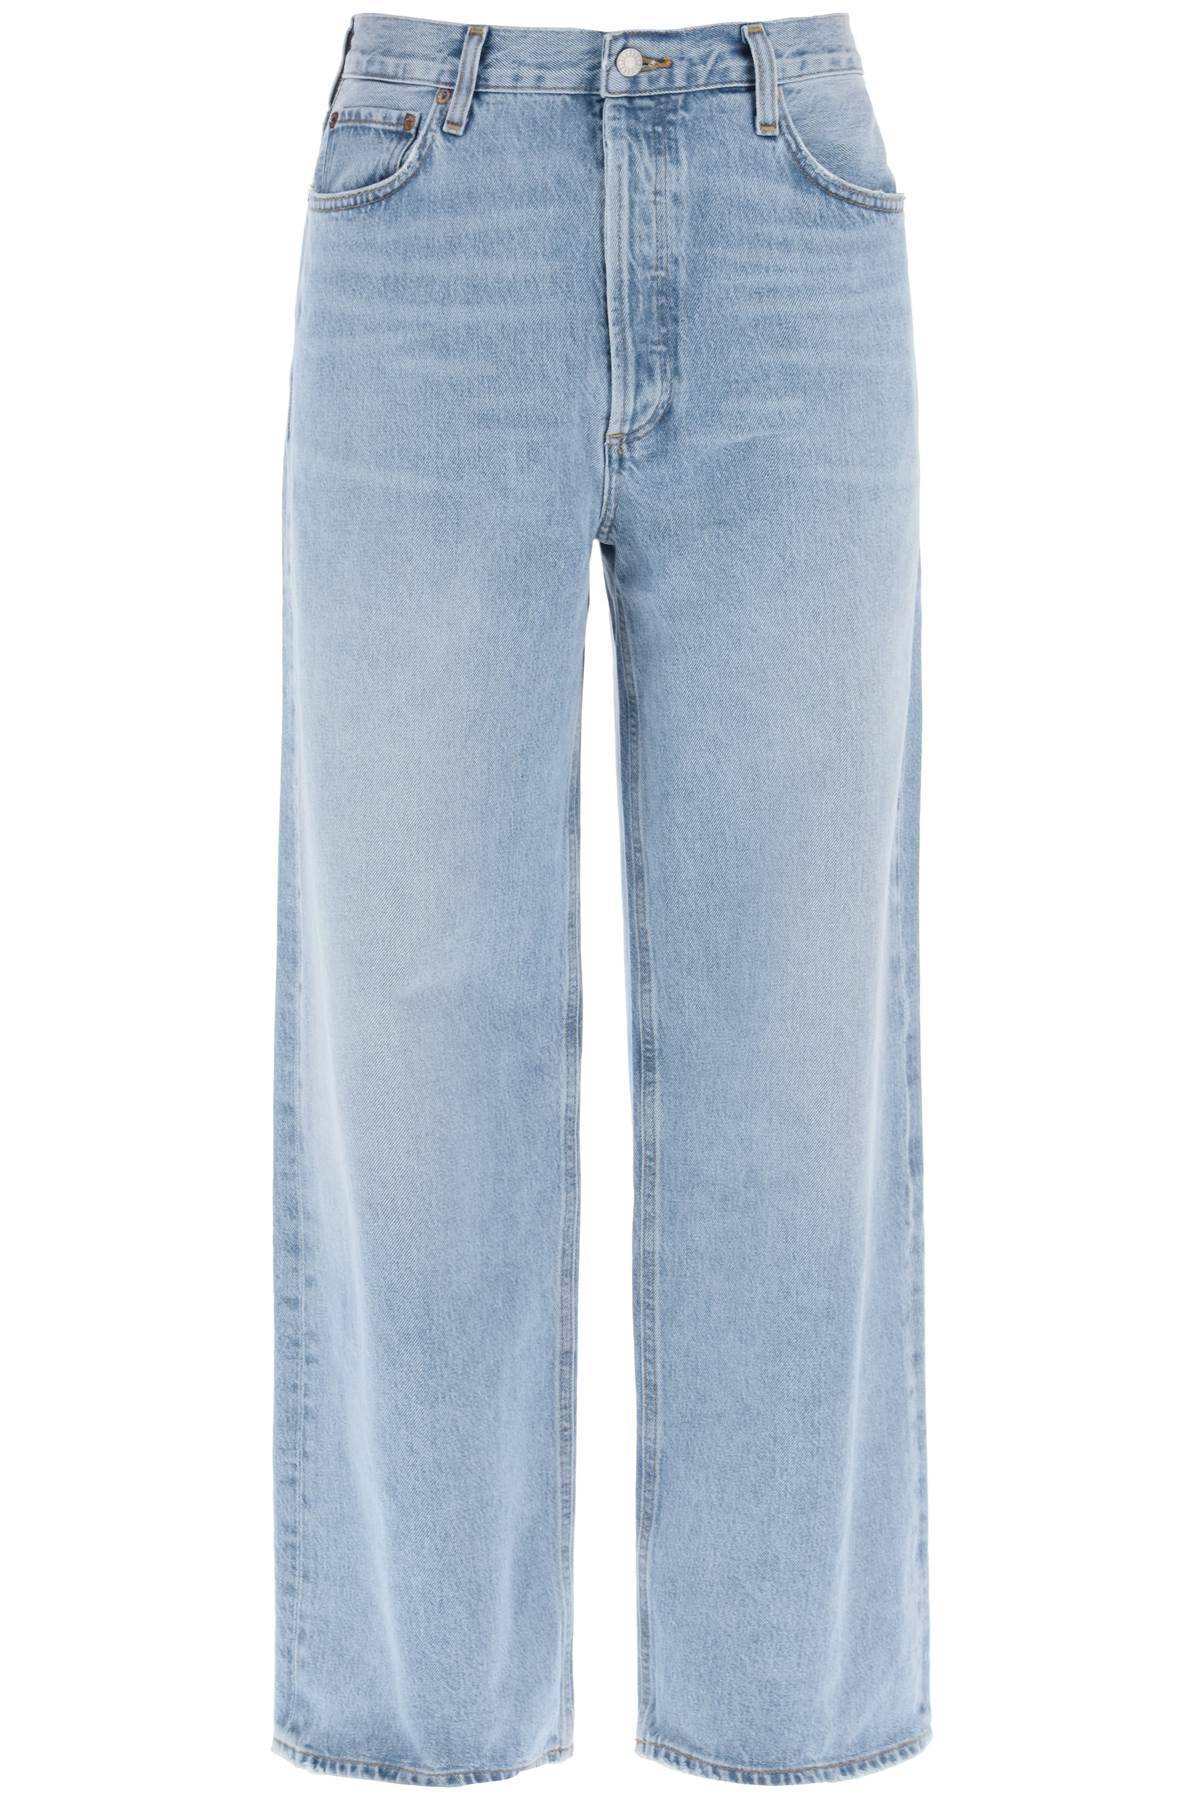 AGOLDE AGOLDE baggy slung jeans